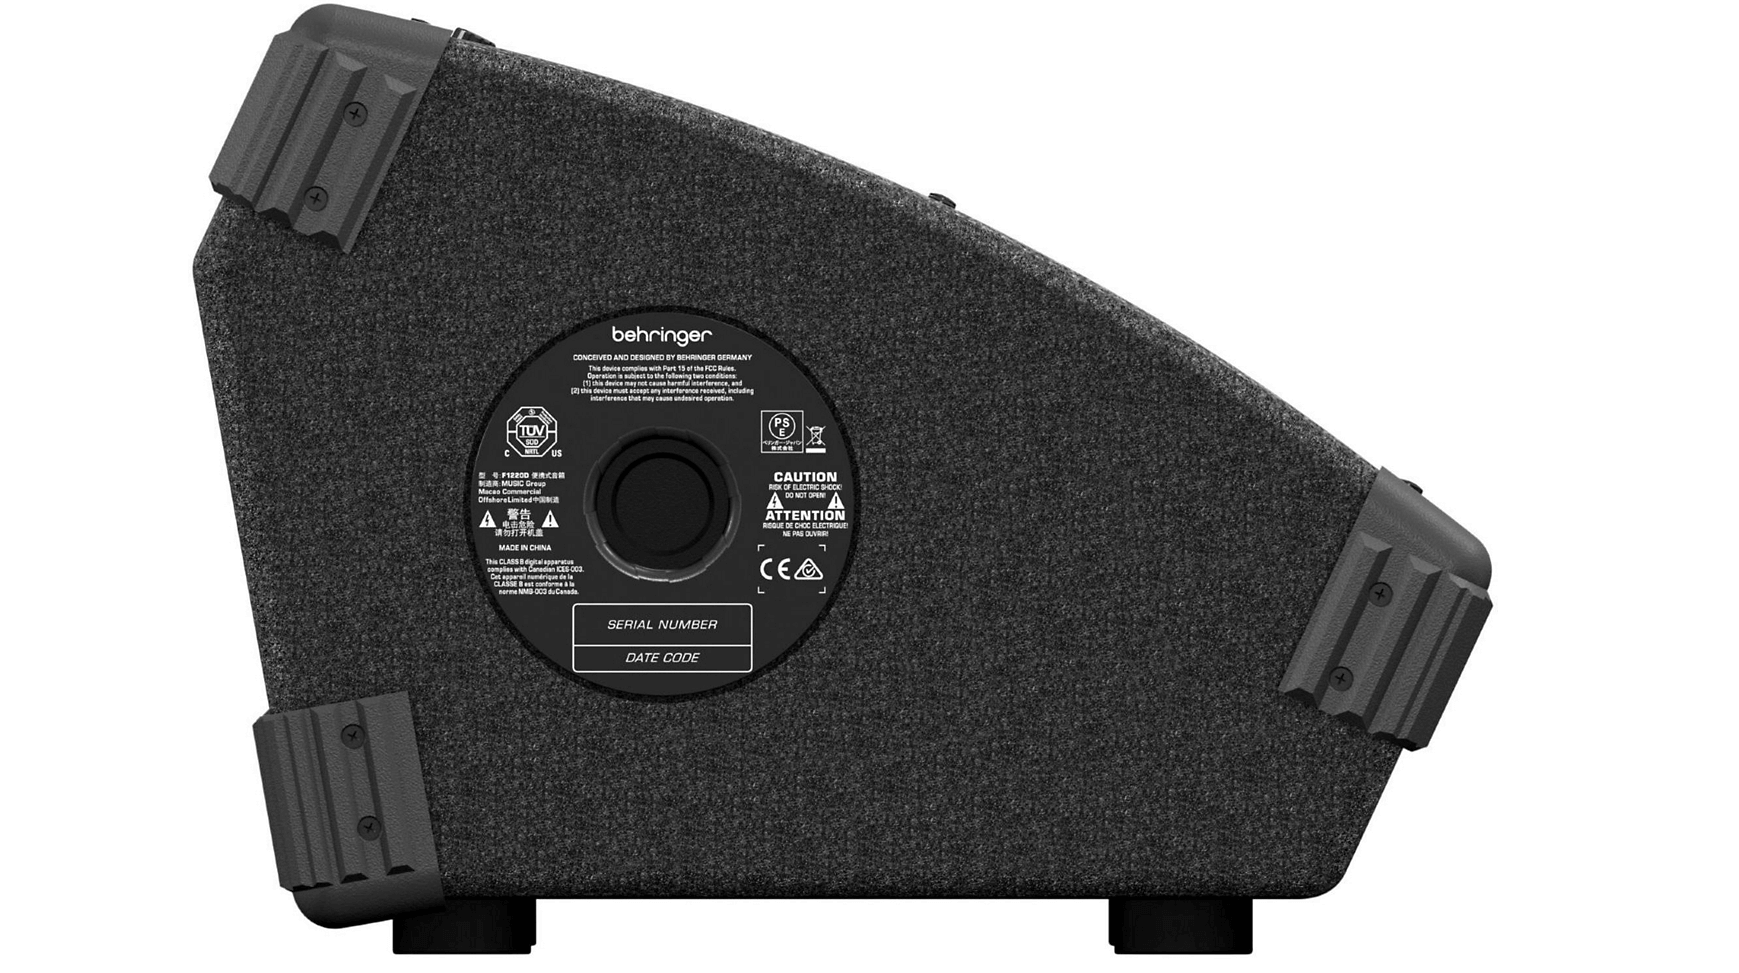 Behringer Eurolive F1220D 250W 12 inch Active Floor Monitor